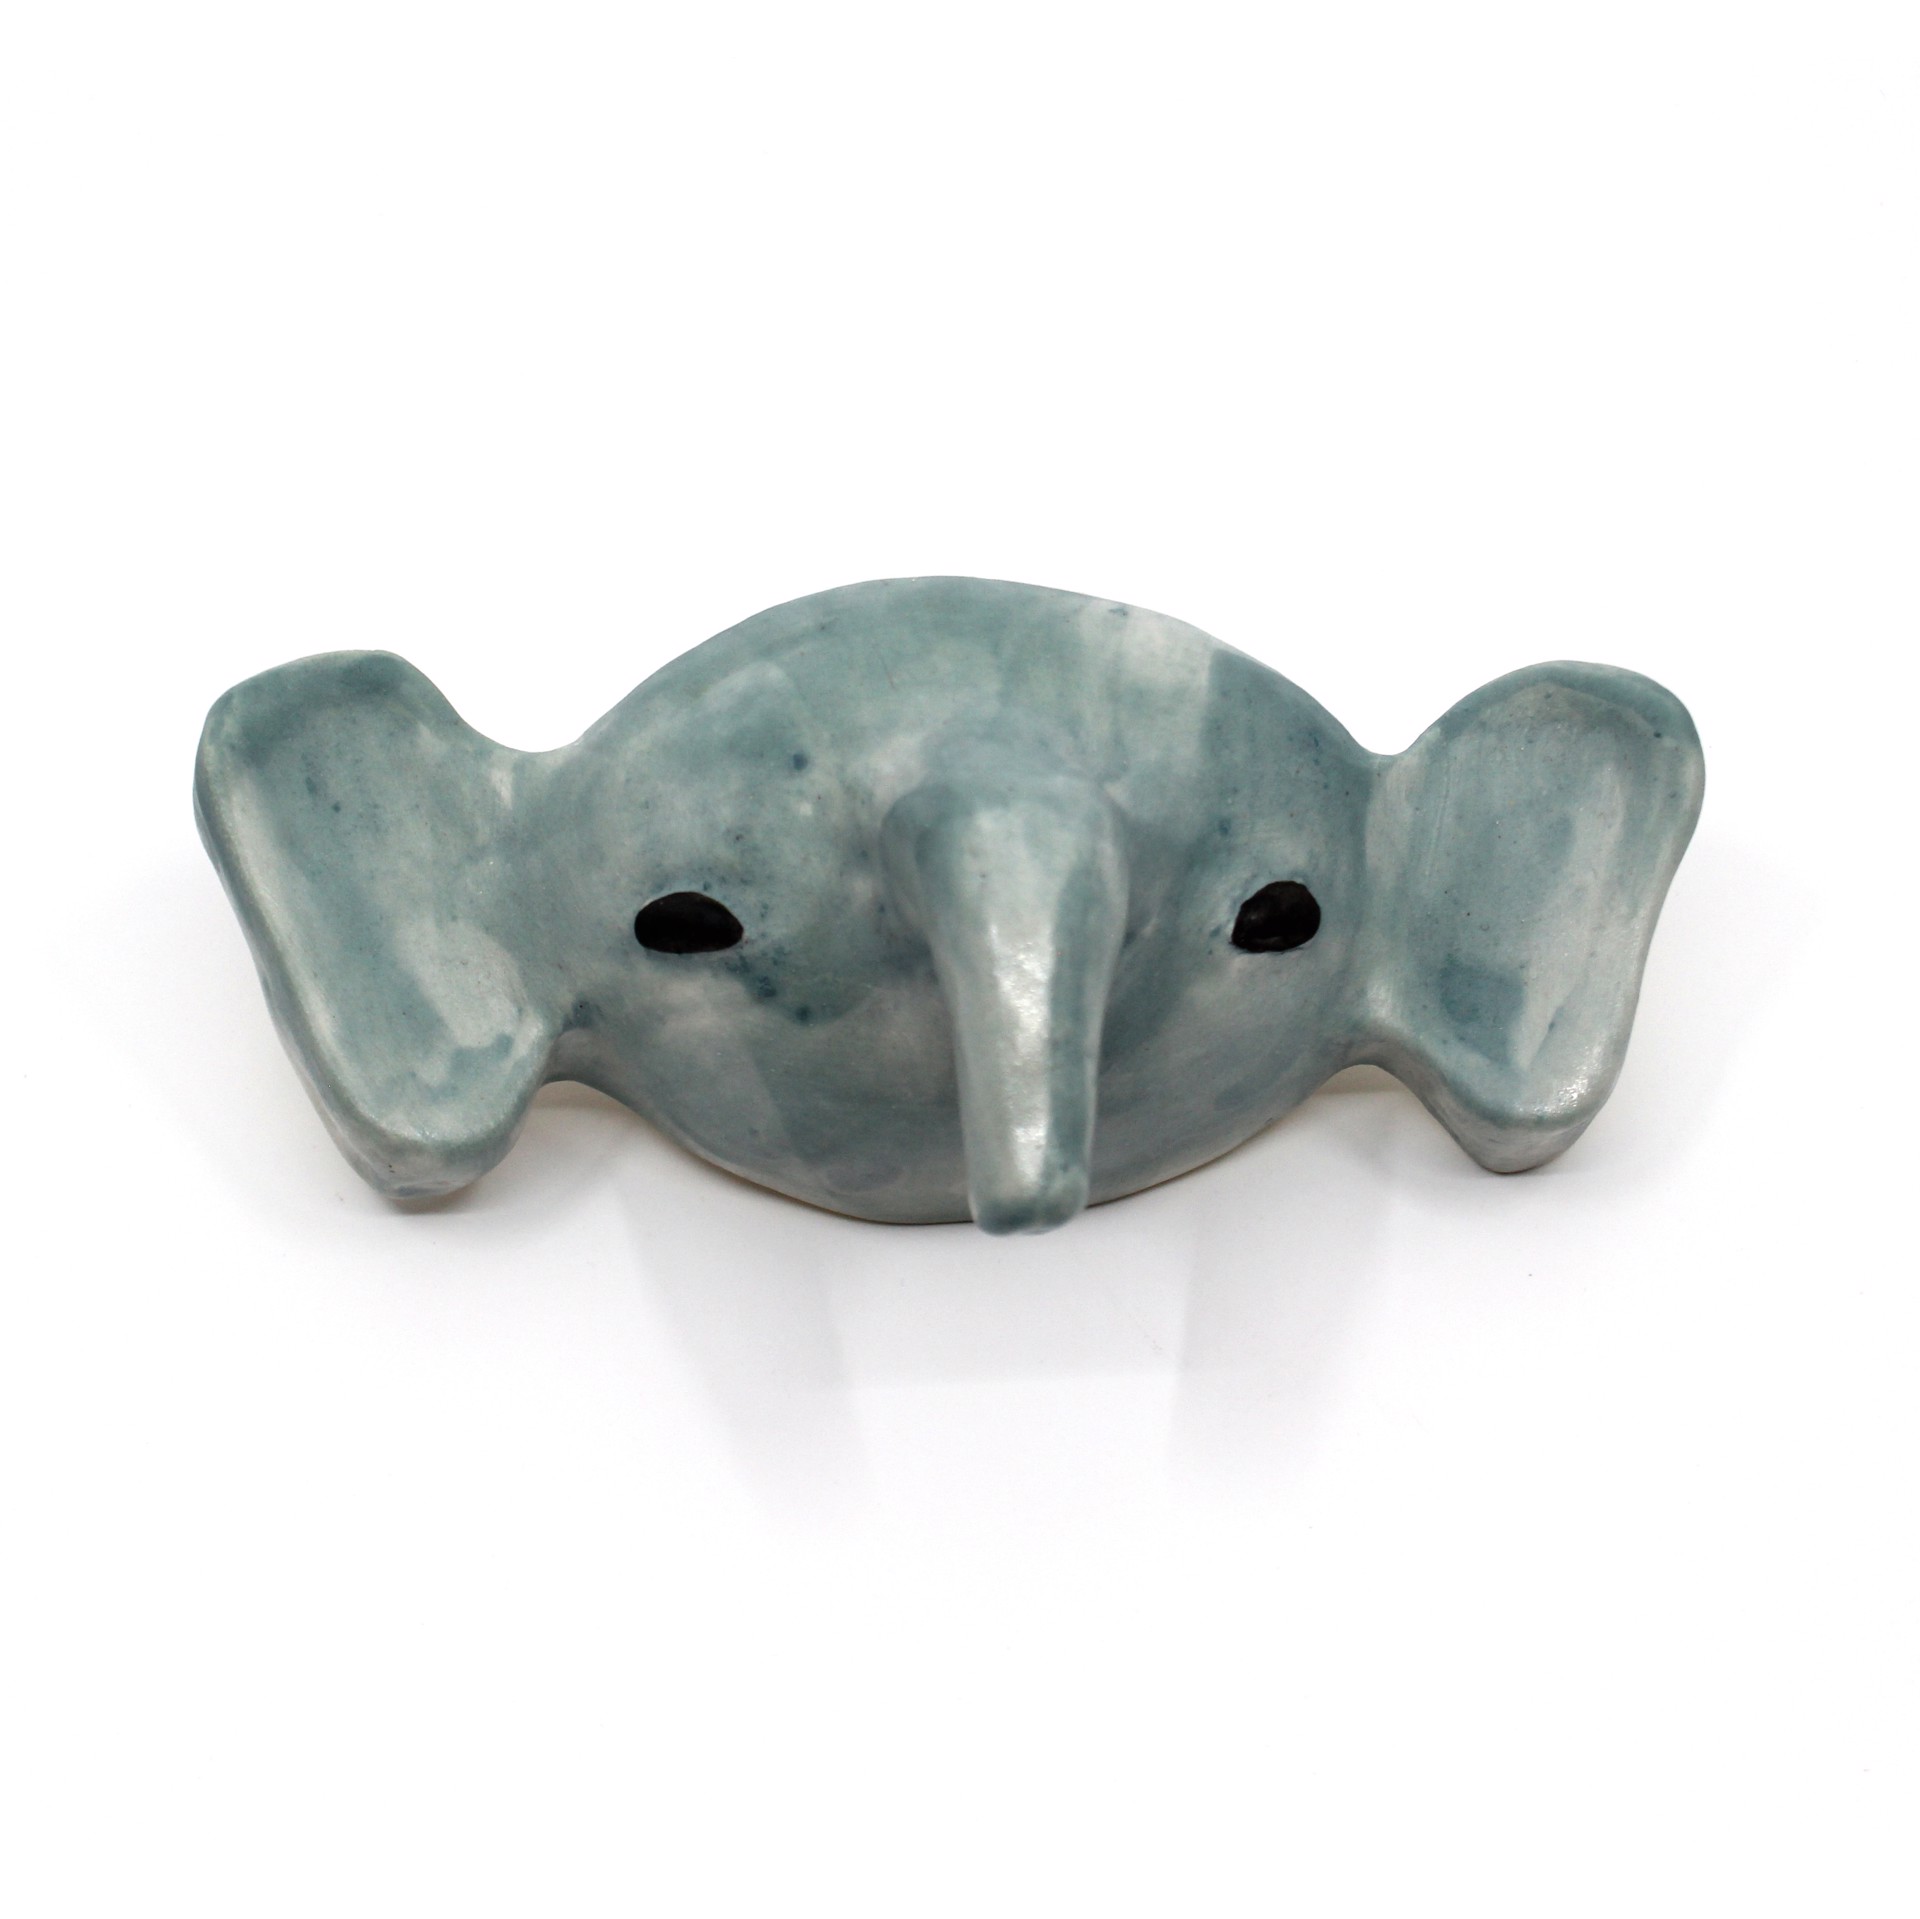 Mascara Elefante Pequeño by Iohan Figueroa